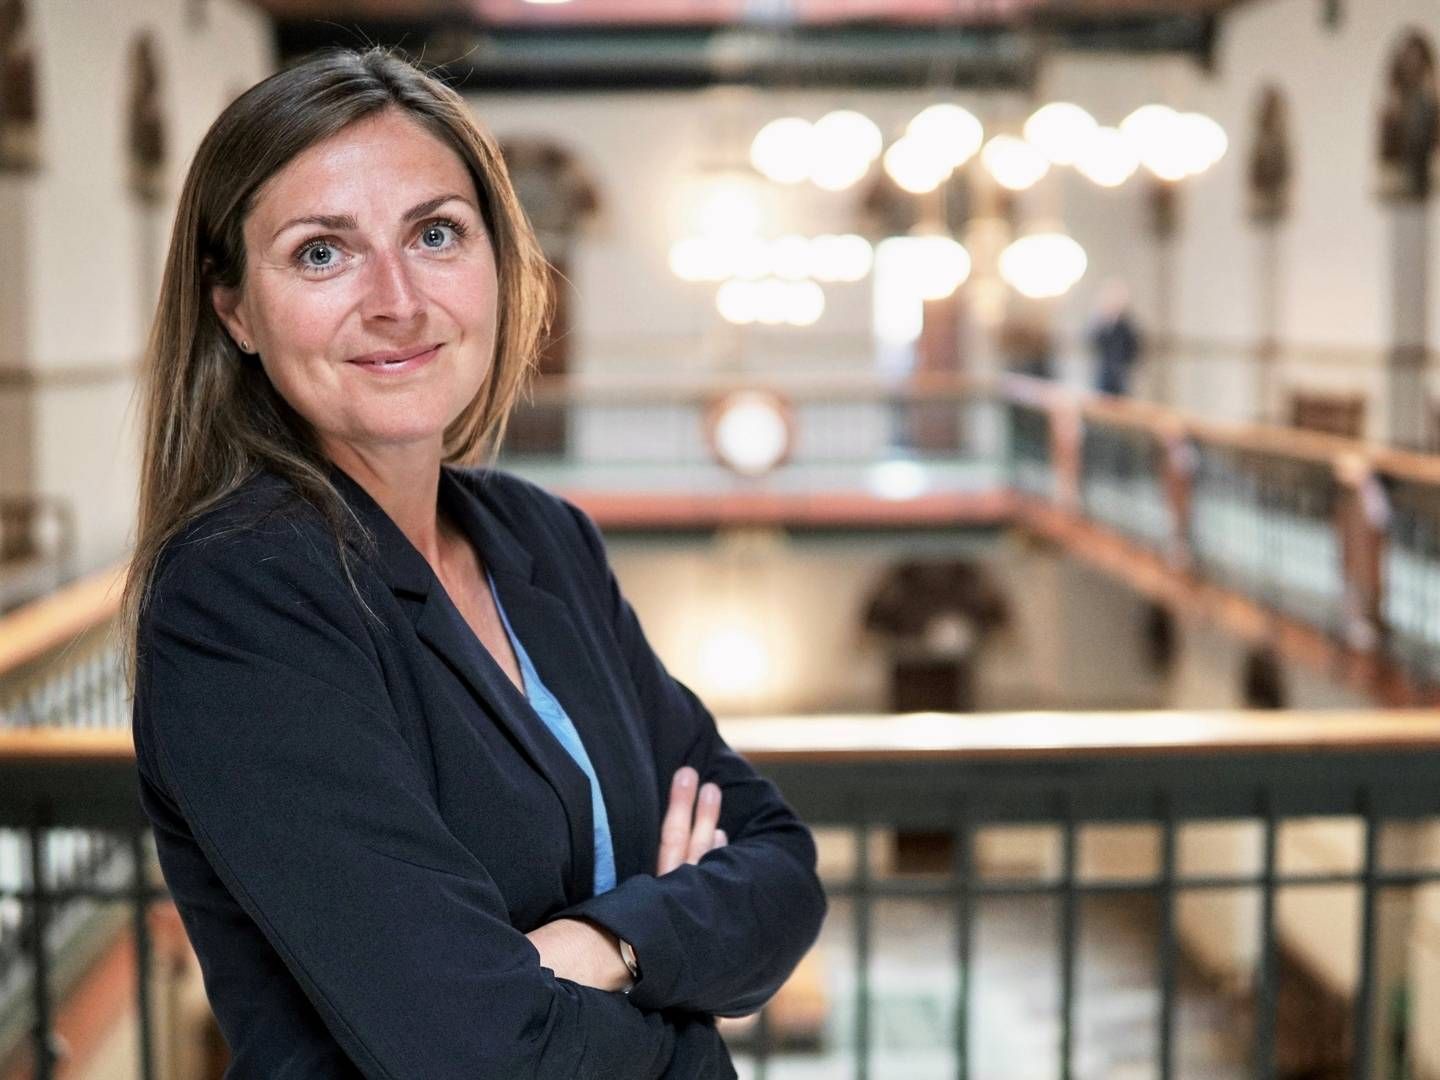 Helle Harbo Holm er ny kommunikationschef i Danmarks Nationalbank. | Foto: Foto: Agnete Christiansen.